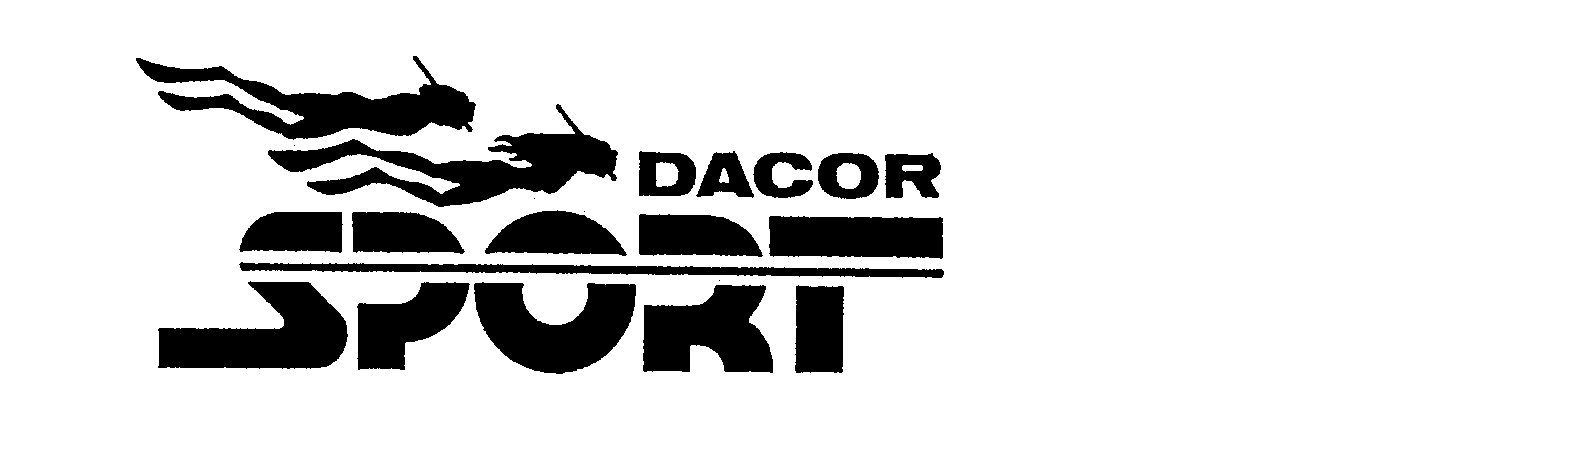  DACOR SPORT